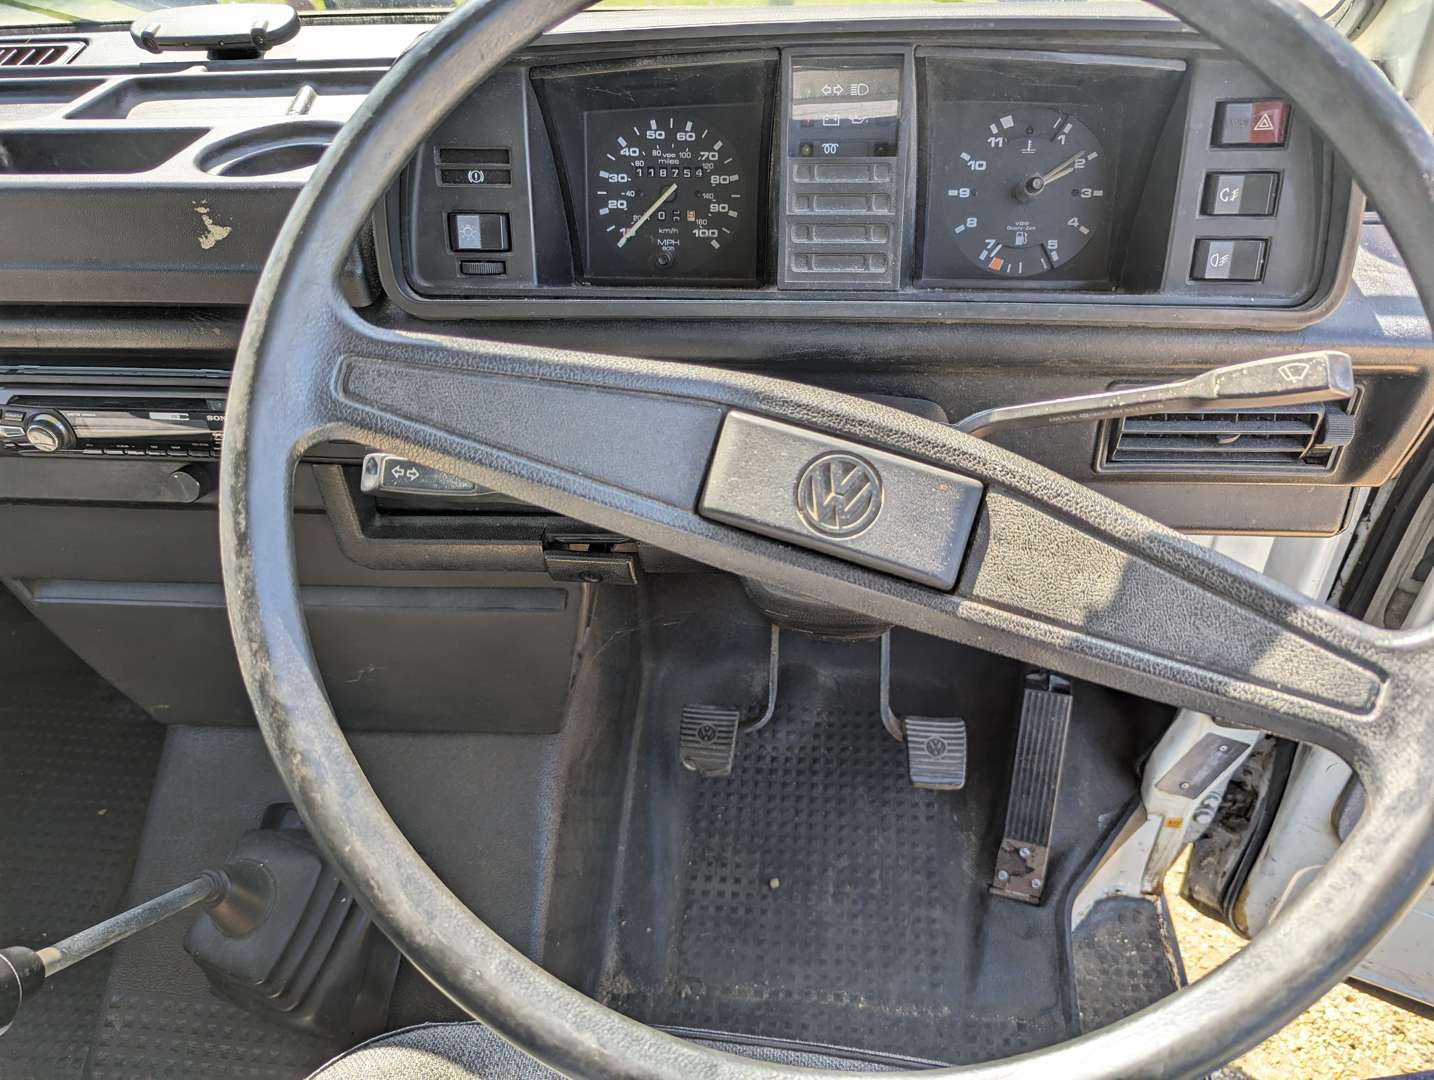 <p>1989 VW TRANSPORTER TD 5 DIESEL</p>